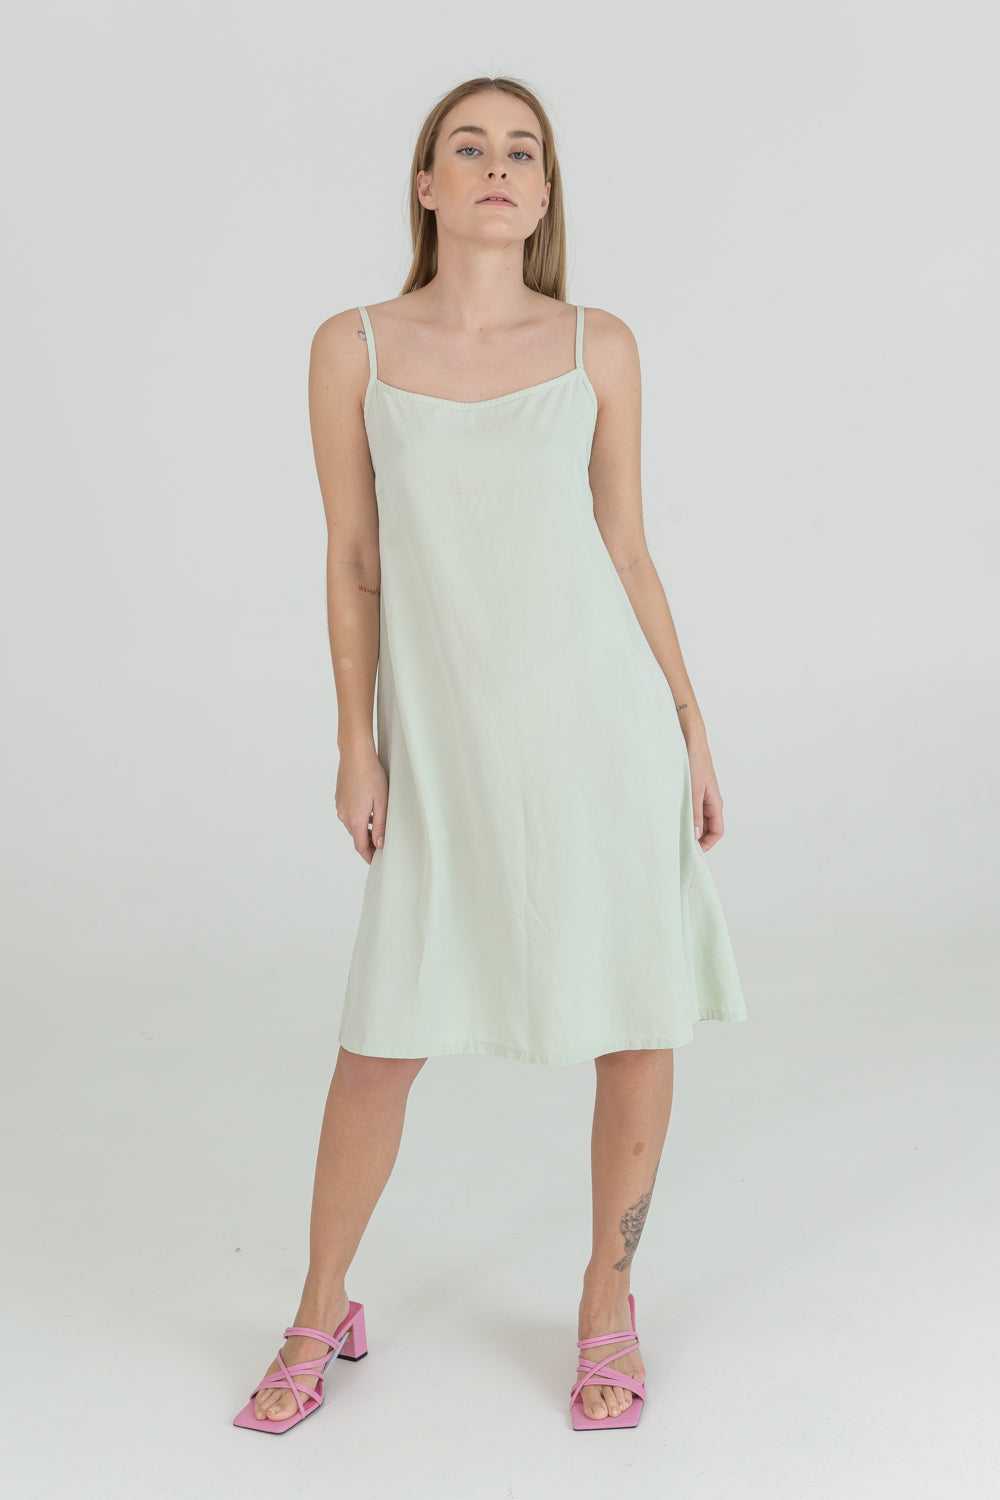 Slip Dress, nachhaltig produziert, Story of mine münster, Farbe mint